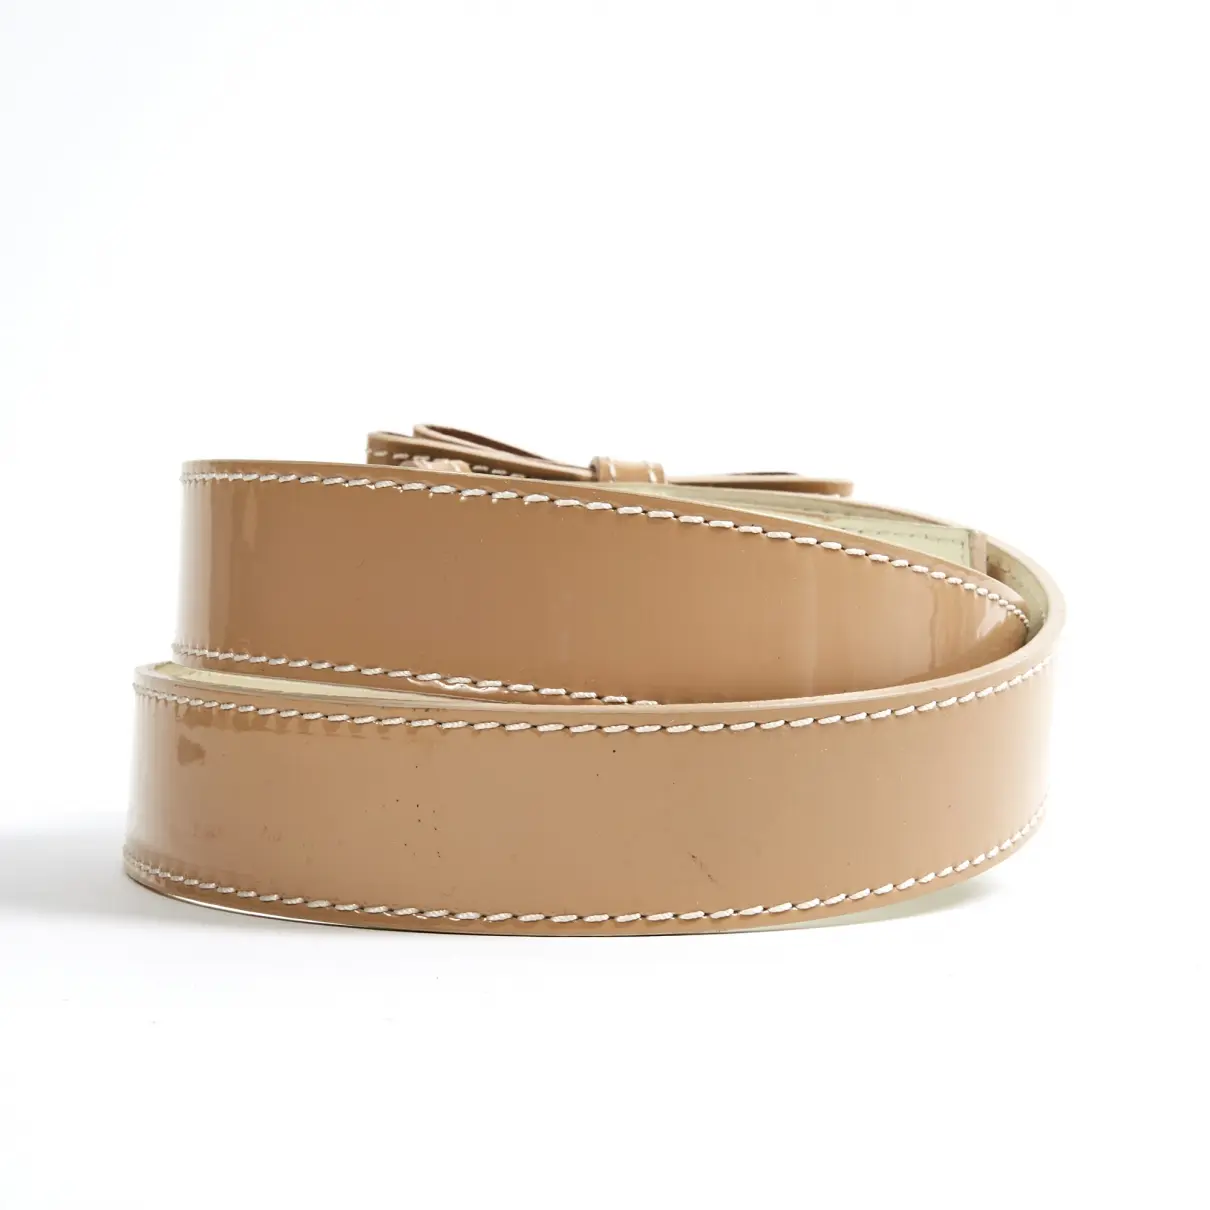 Valentino Garavani Patent leather belt for sale